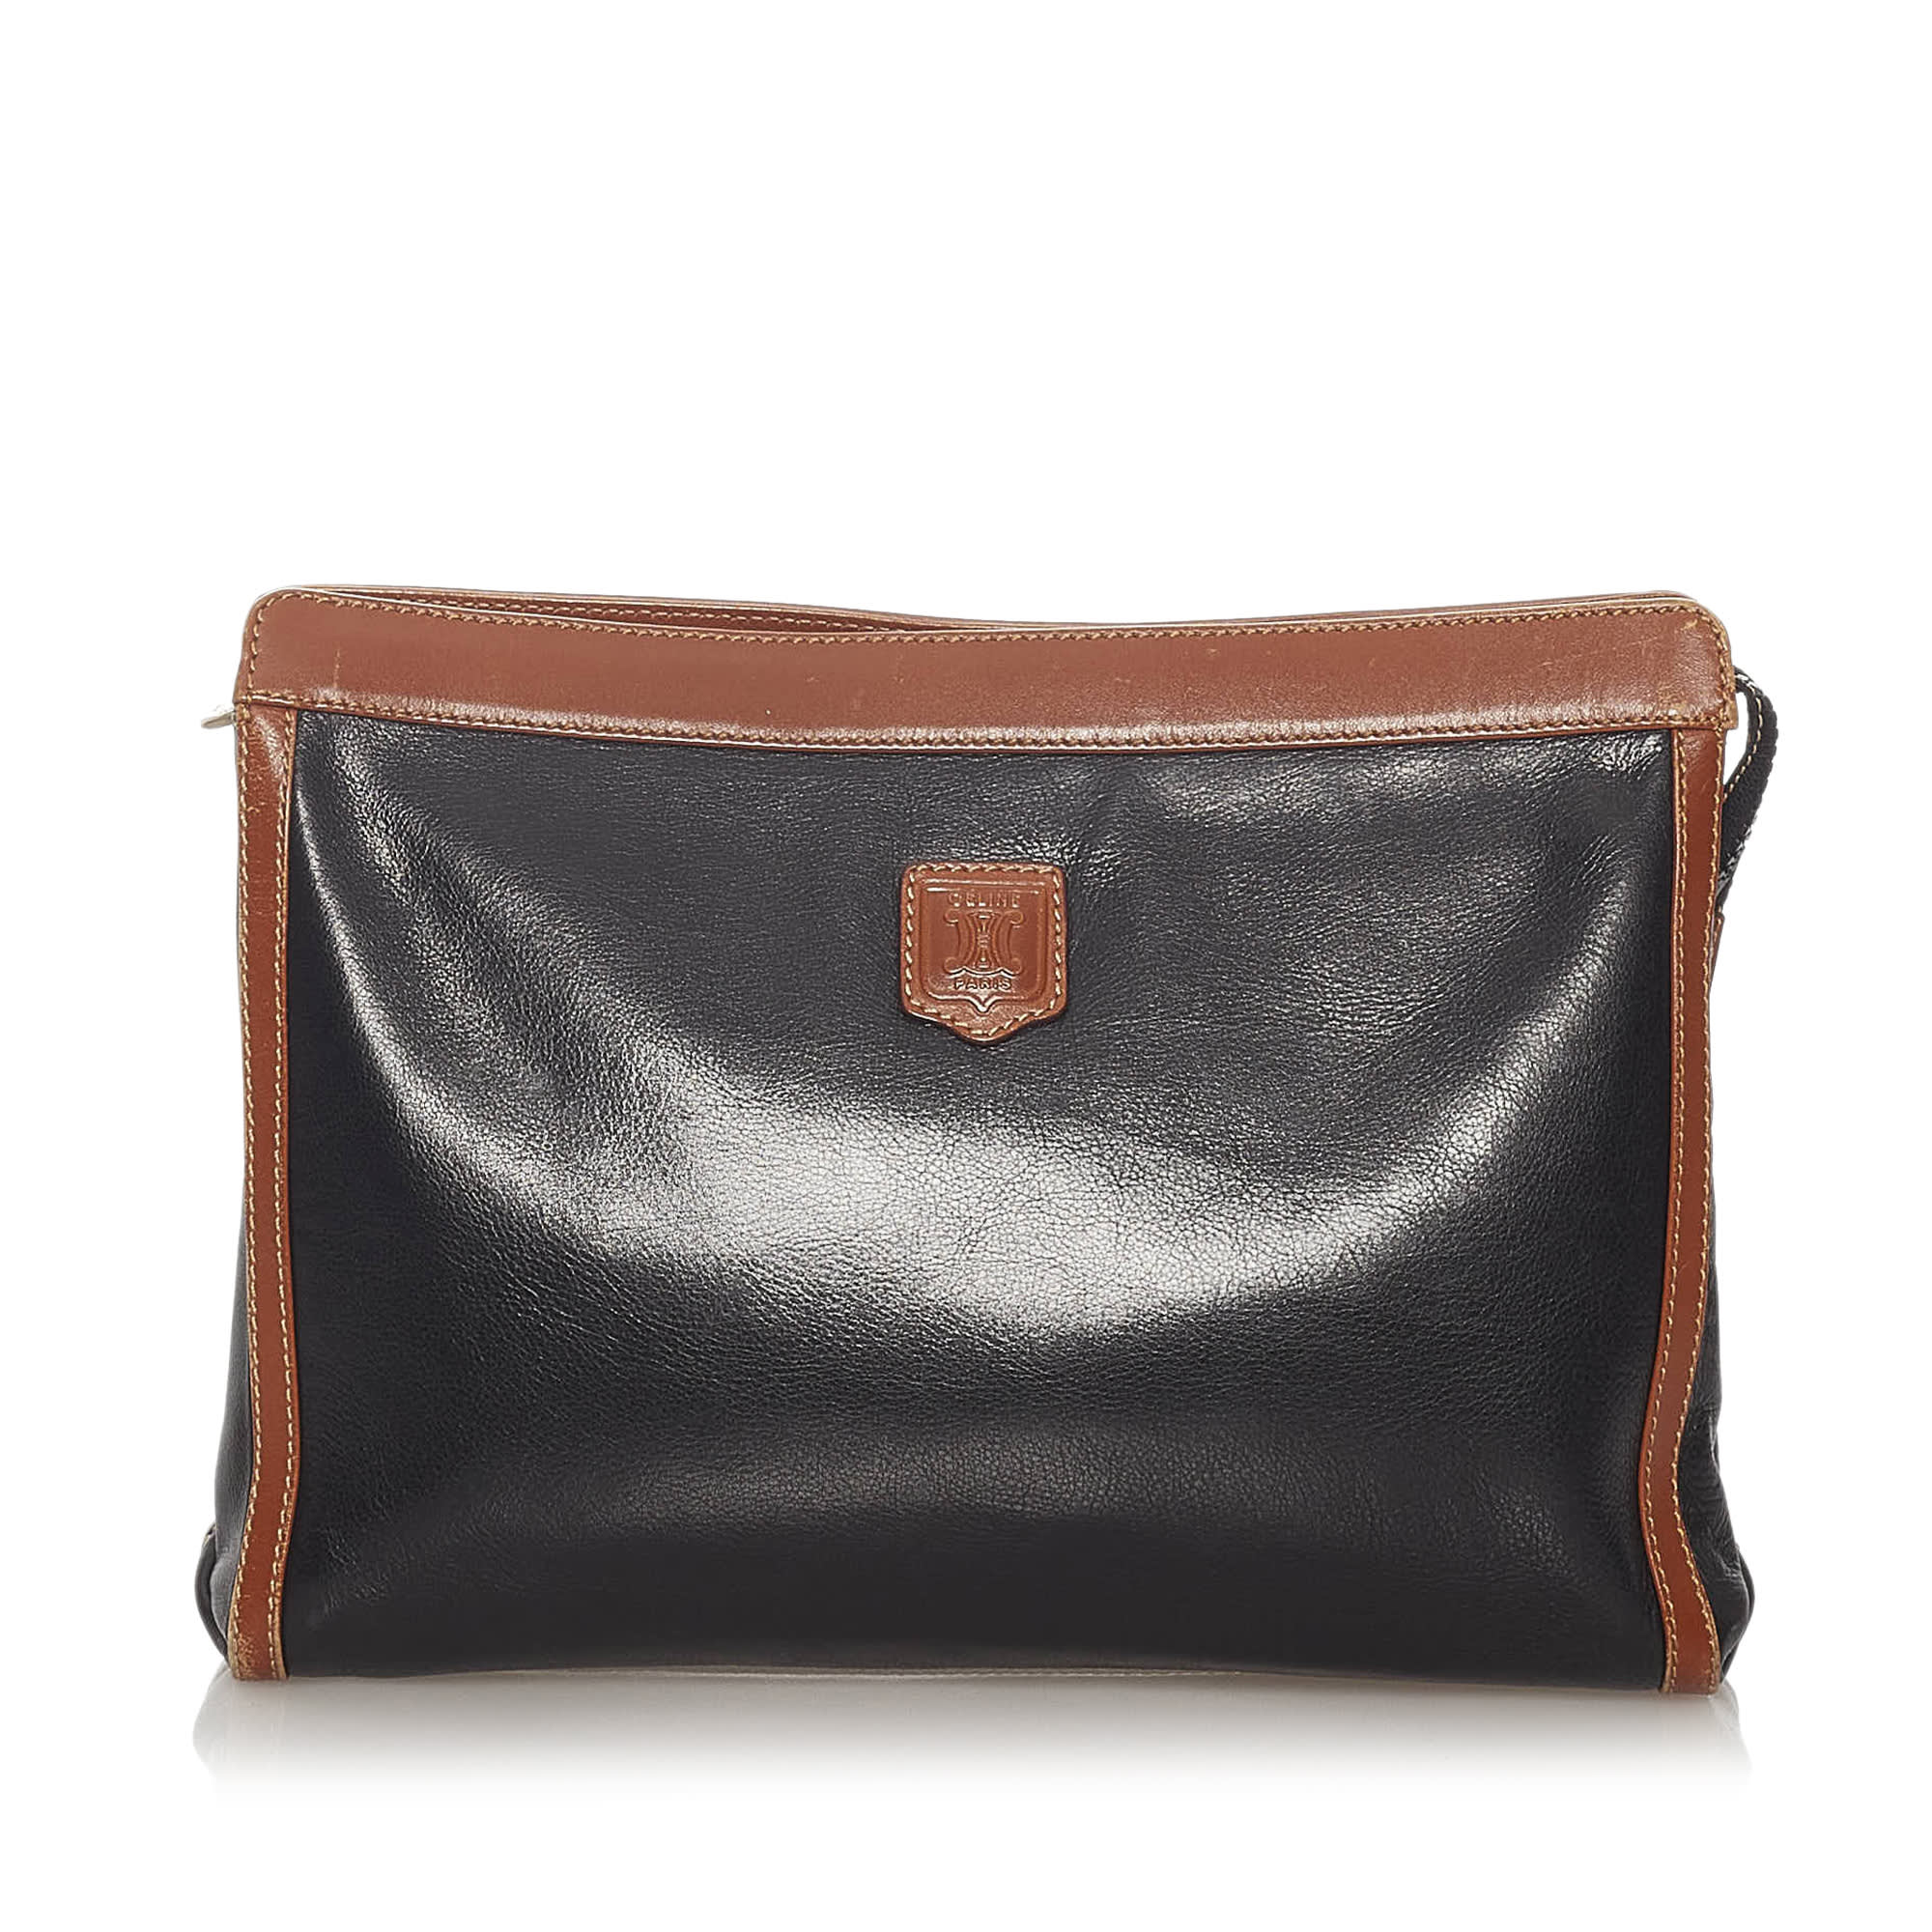 Celine Leather Clutch Bag, ONESIZE, black